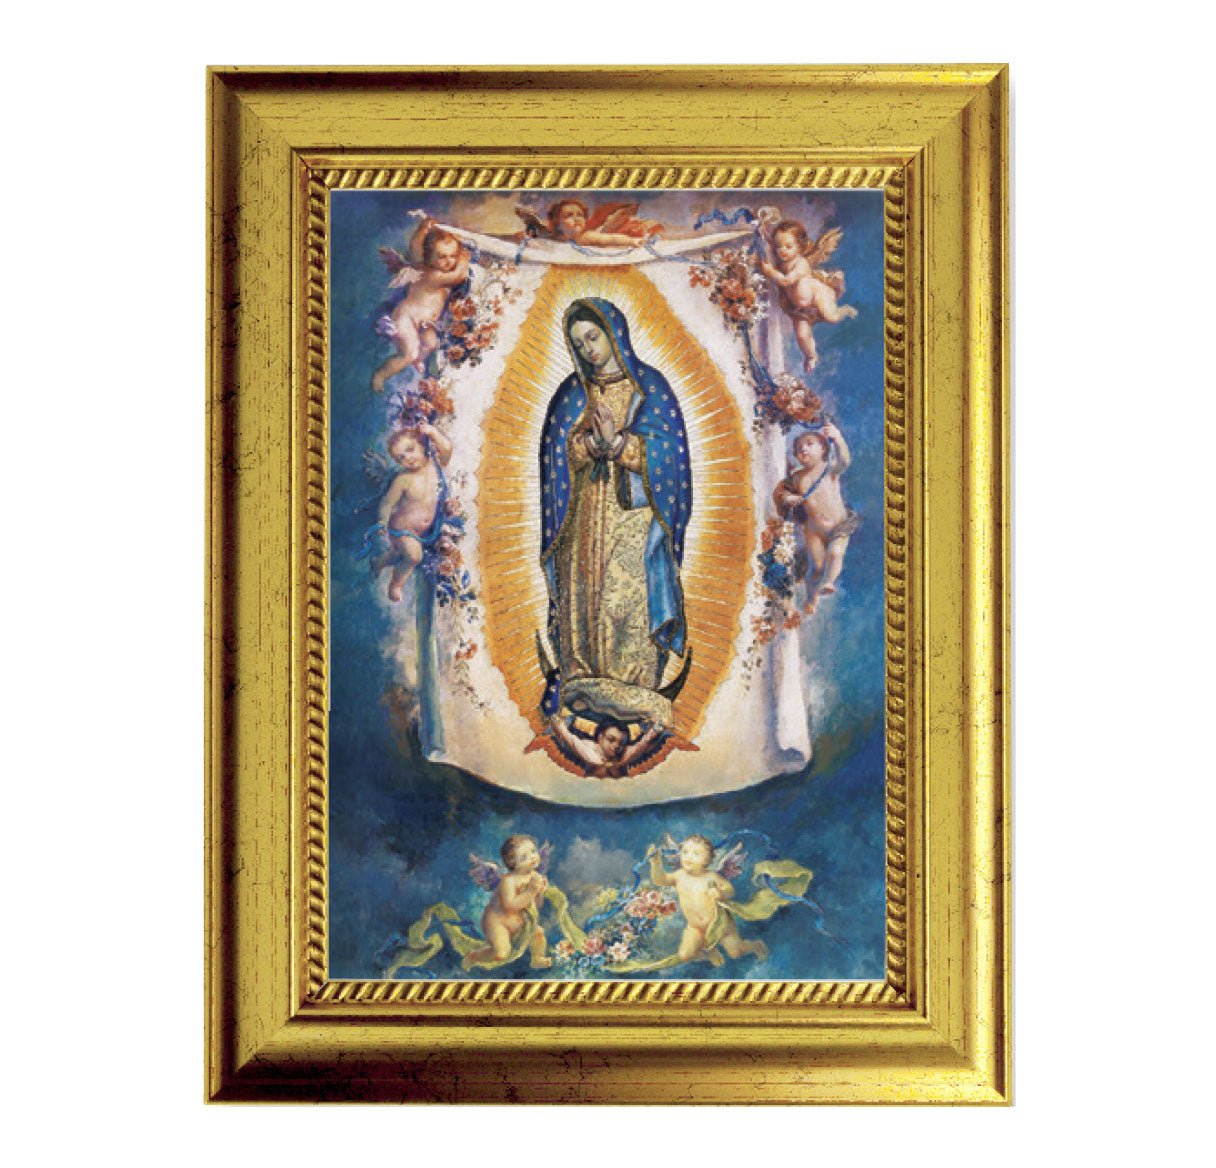 Our Lady of Guadalupe Gold-Leaf Framed Art